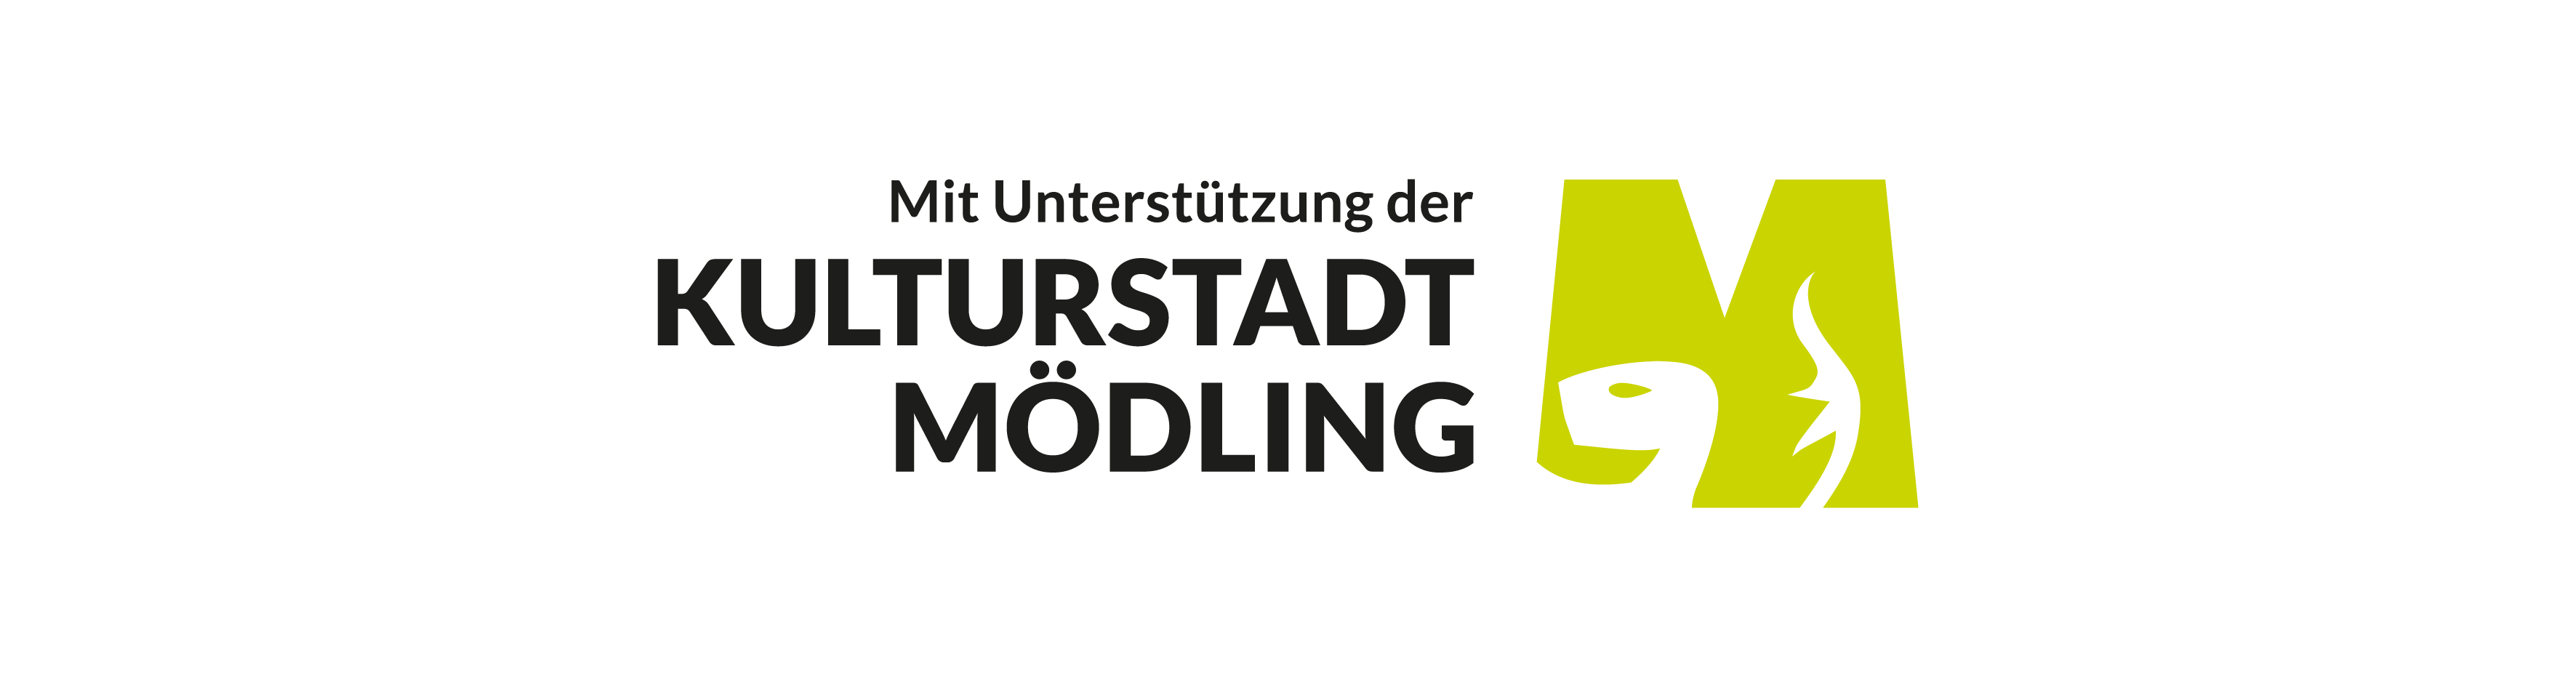 Mödling Logo